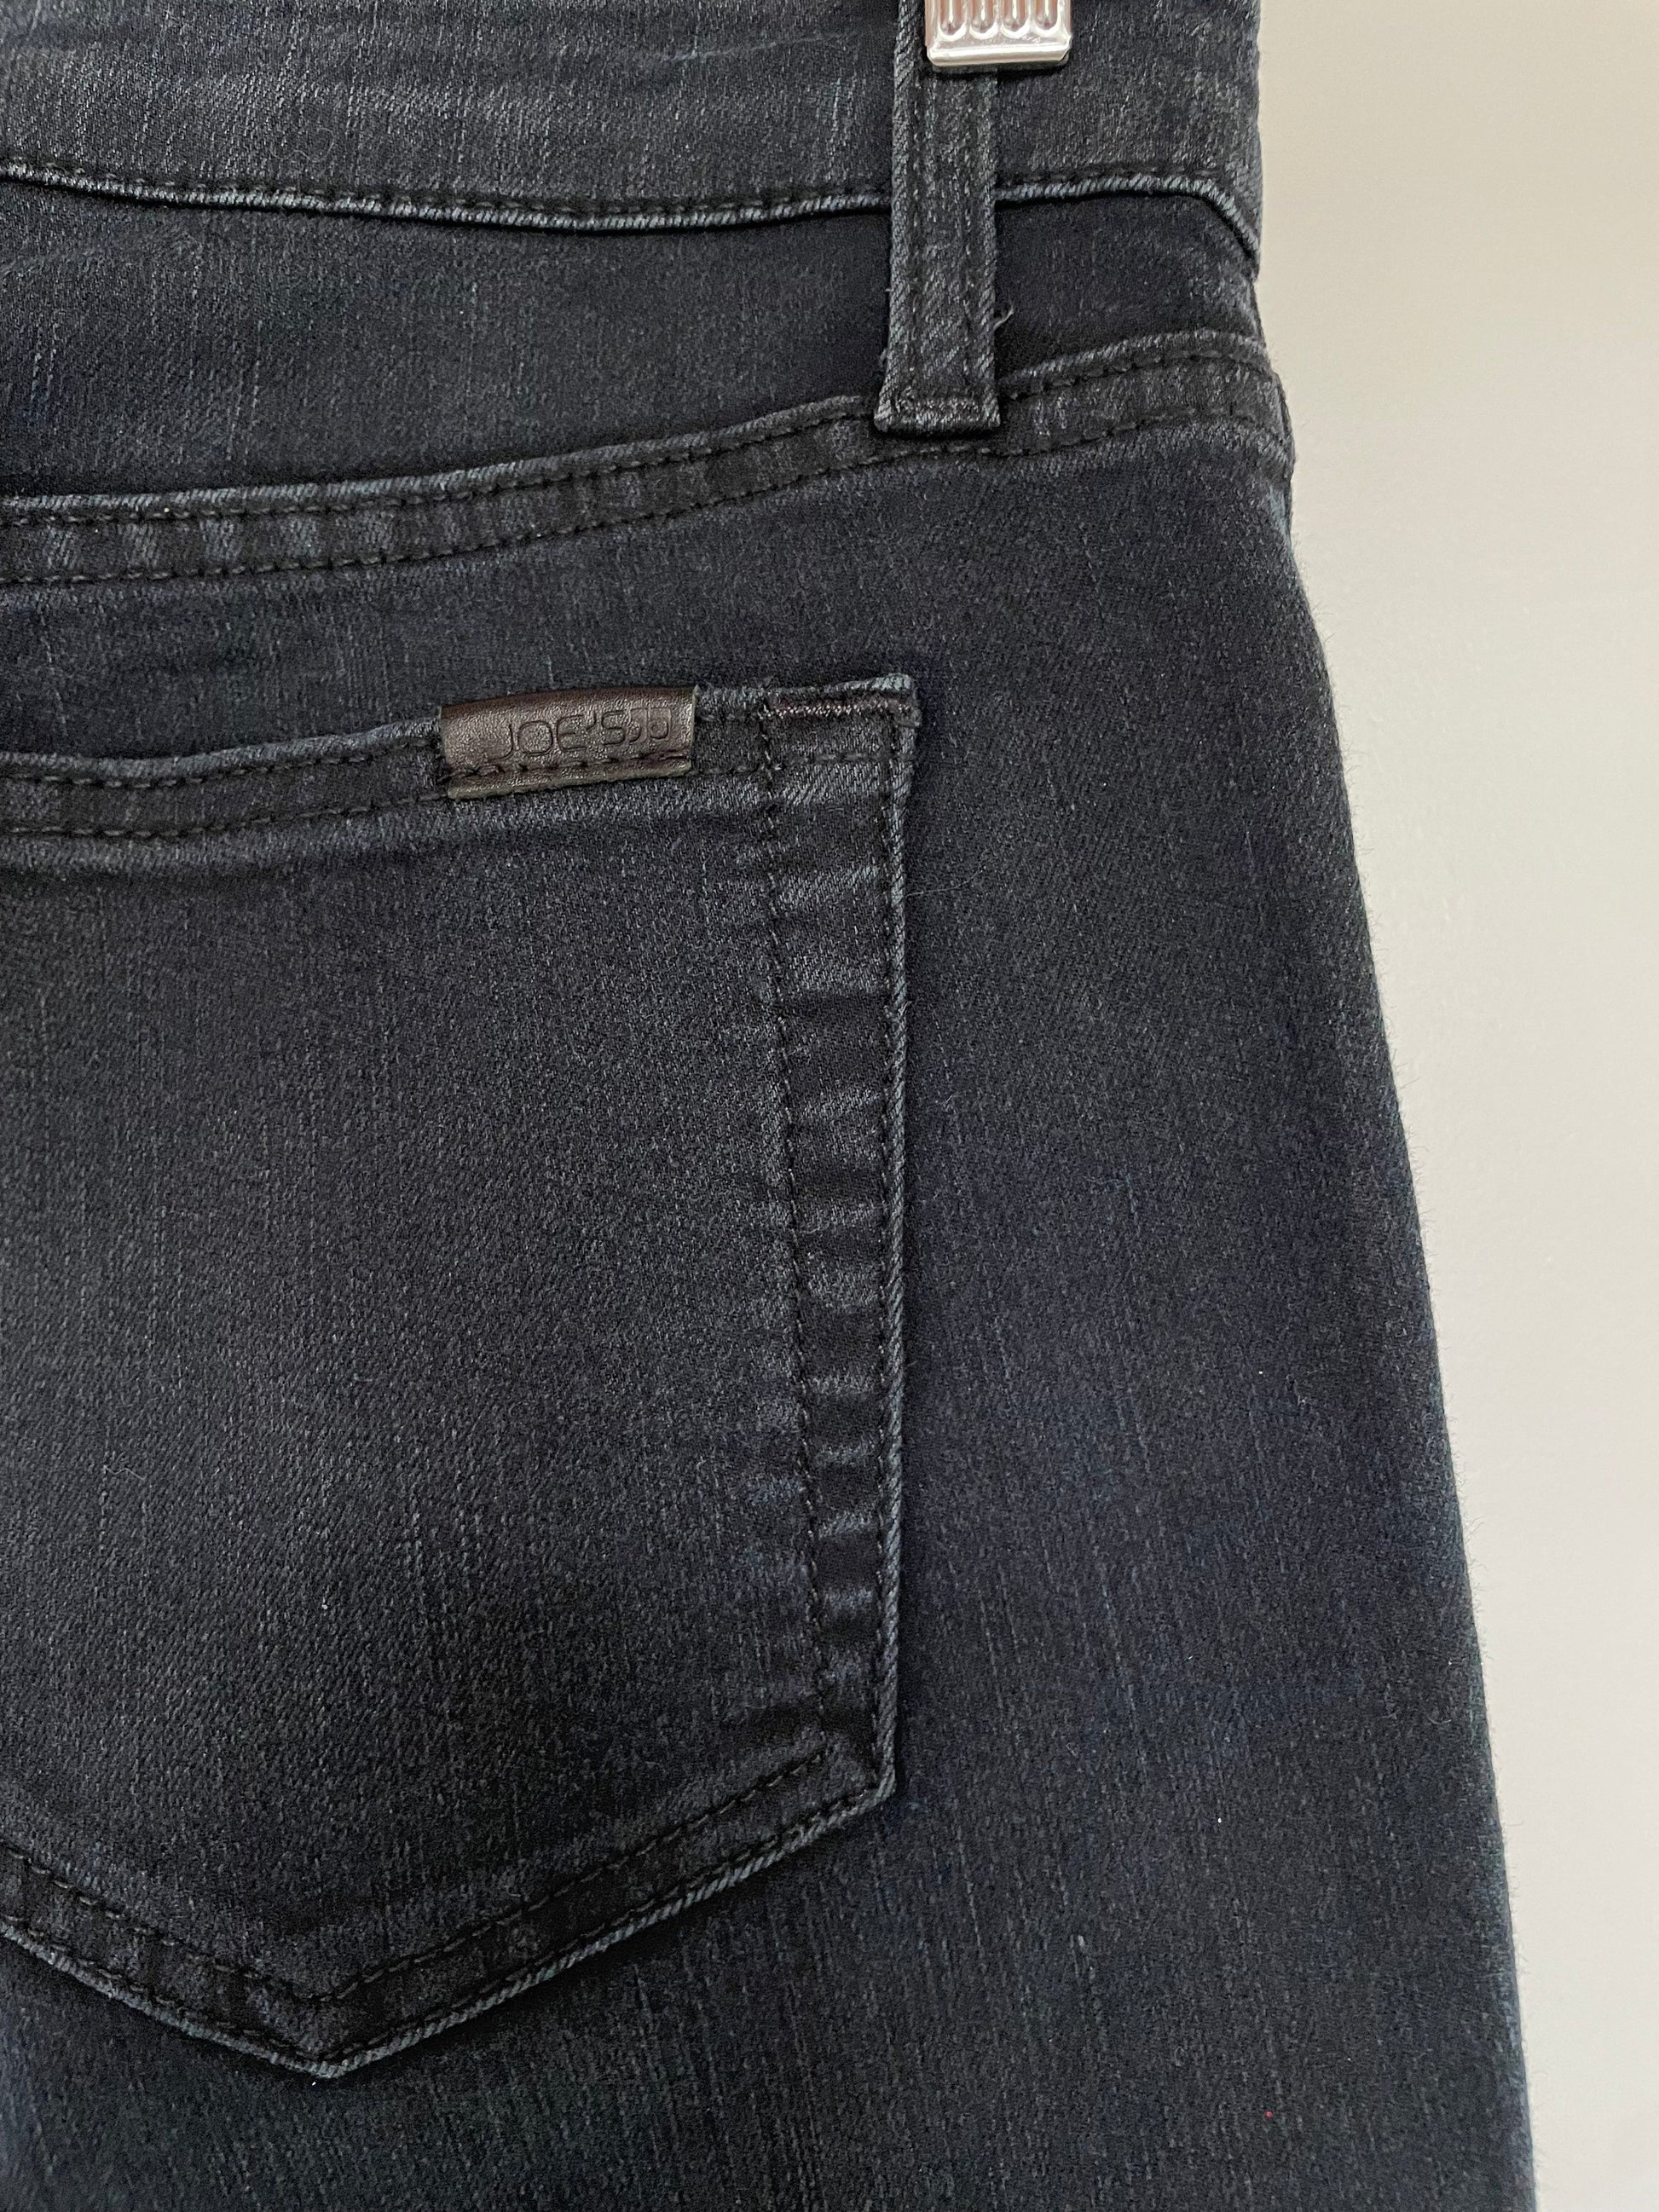 Joe's Skinny jeans high rise | maat 29 - Meisje met de parels